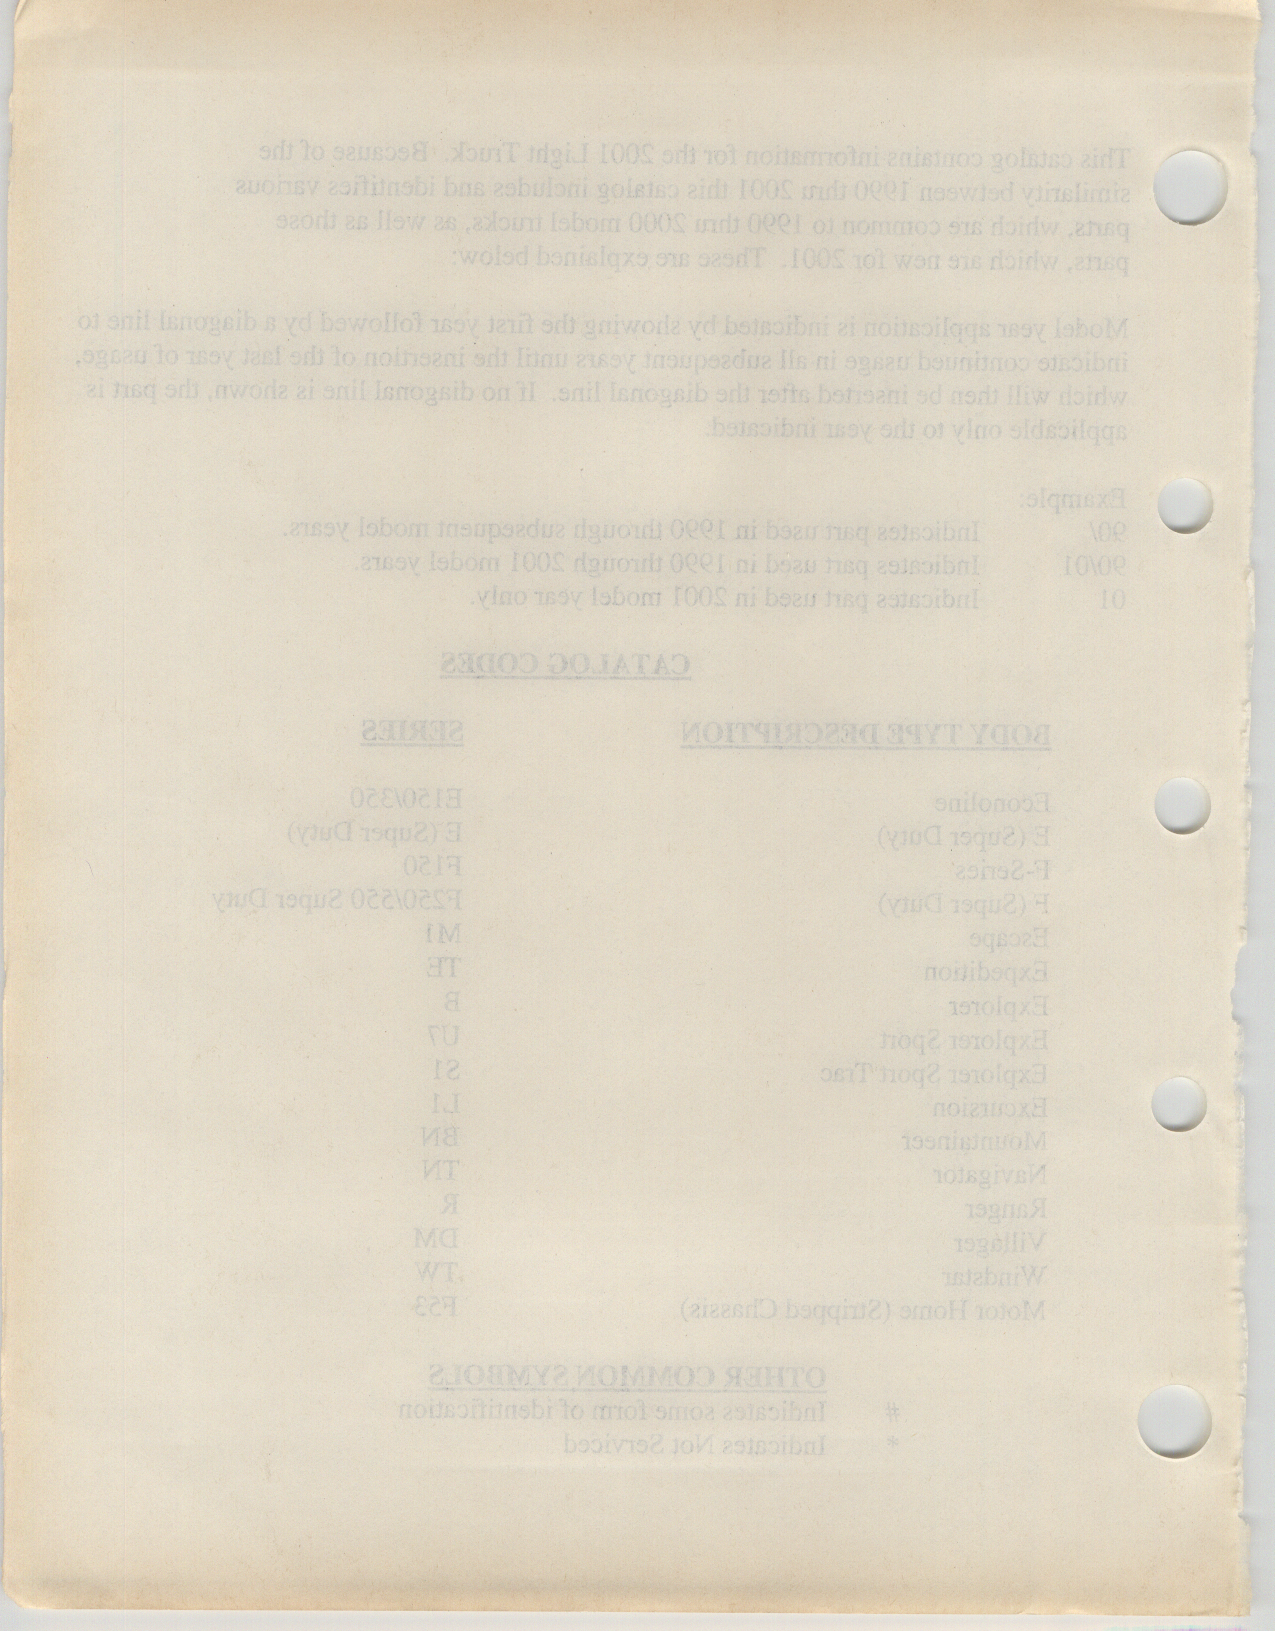 Ford Light Truck Parts Catalog Vol 2 Text Part 1 December 2000